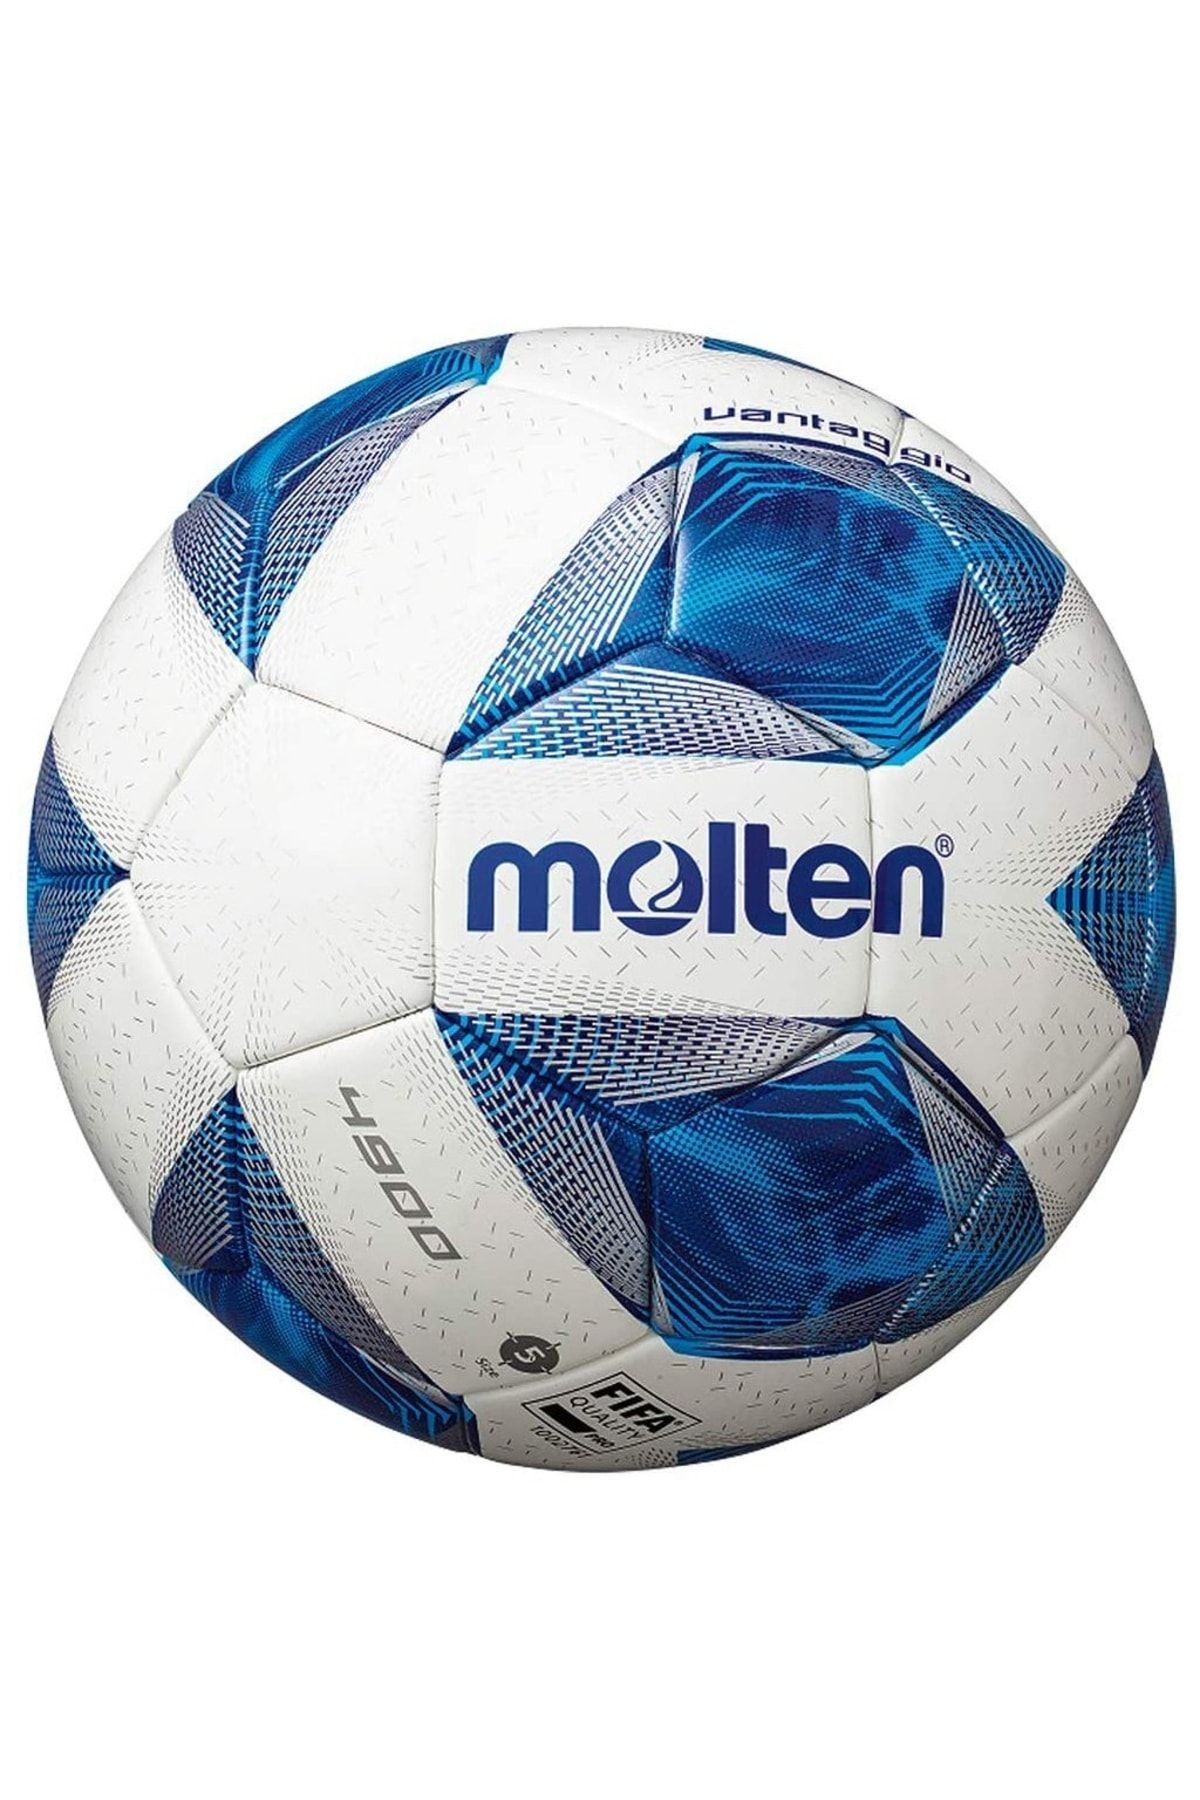 Molten F5a4900 Fıfa Onaylı 5 Numara Futbol Topu